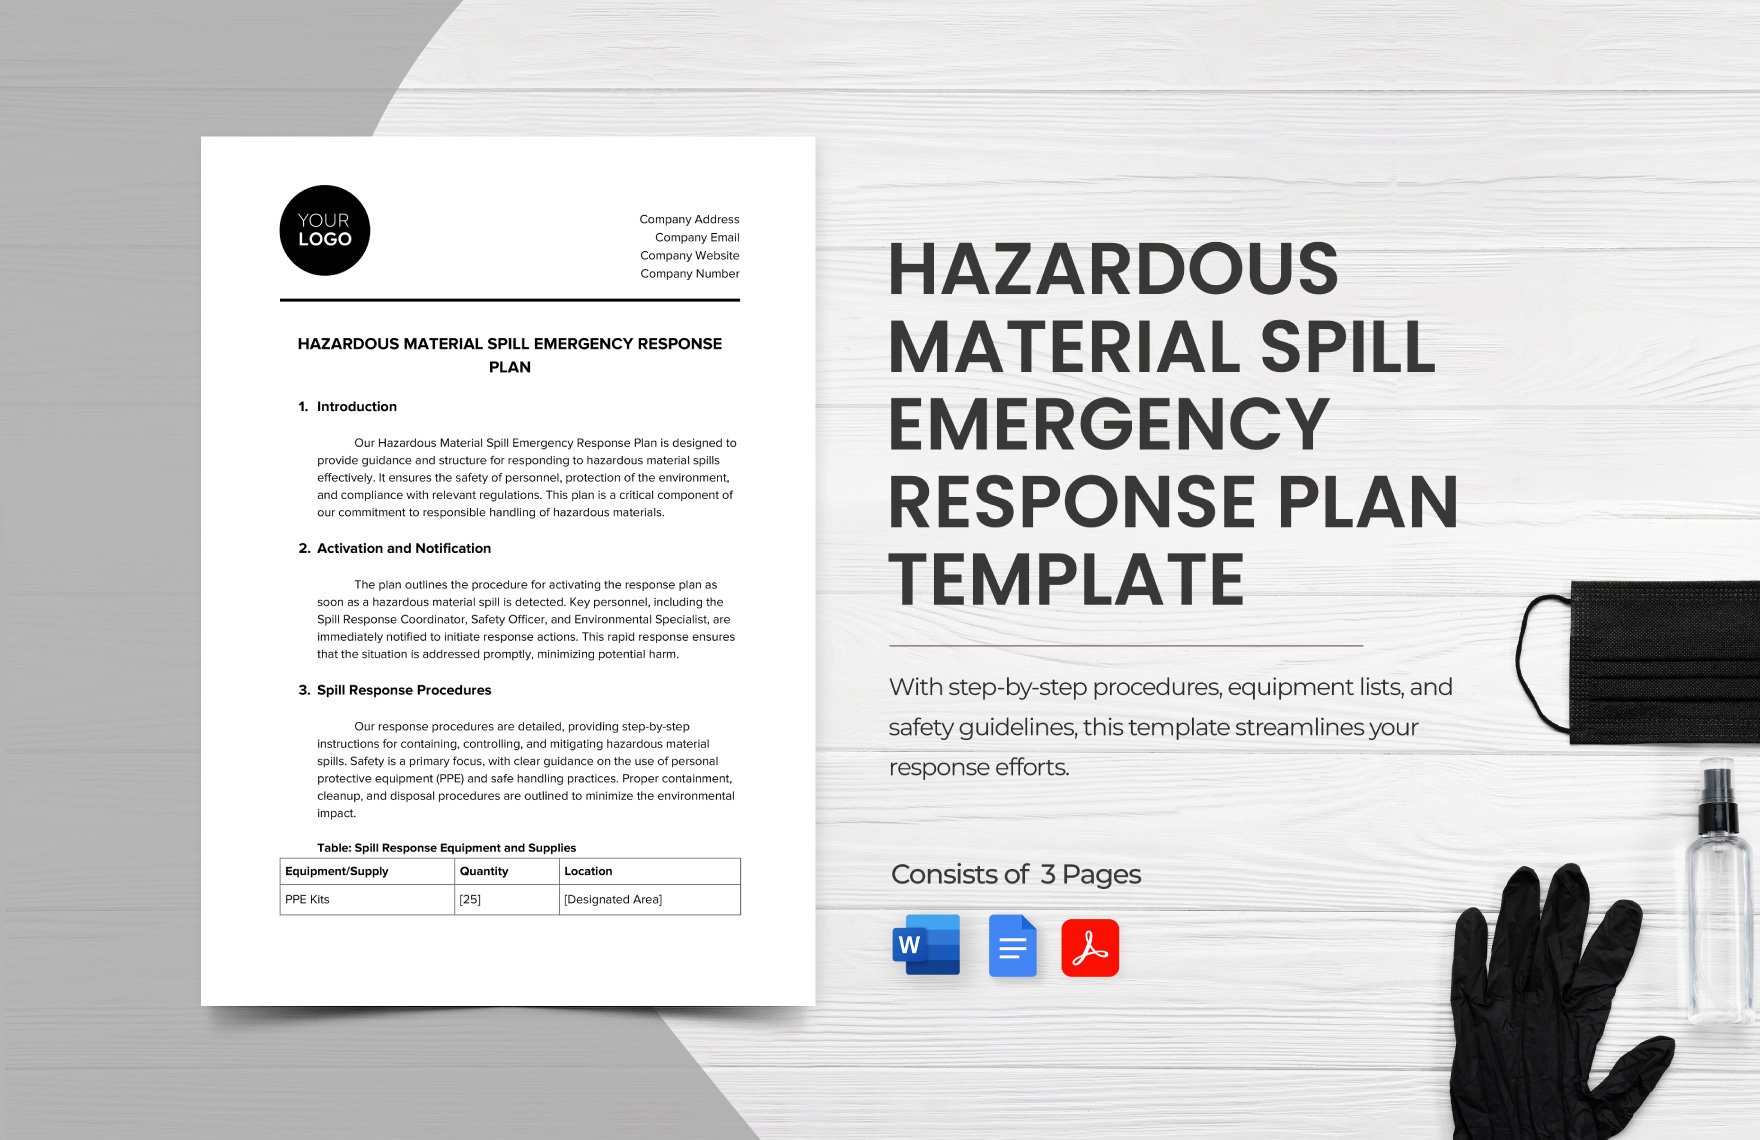 Hazardous Material Spill Emergency Response Plan Template in Word, Google Docs, PDF